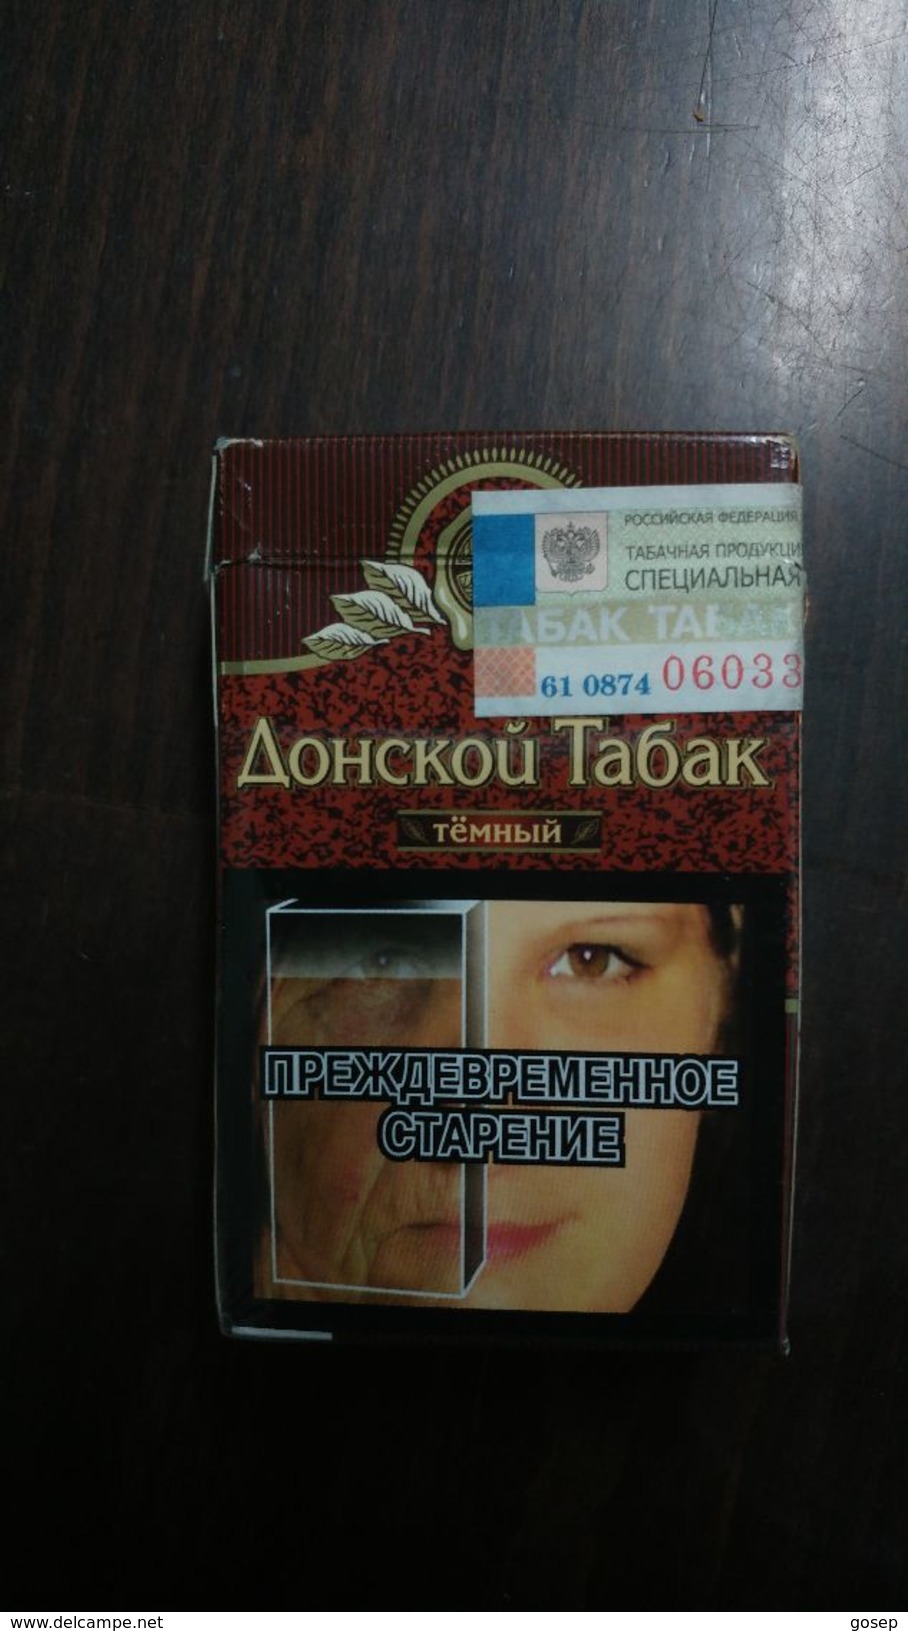 Russia-box Empty Cigarette-aohckou Tabak-(1) - Sigarettenkokers (leeg)